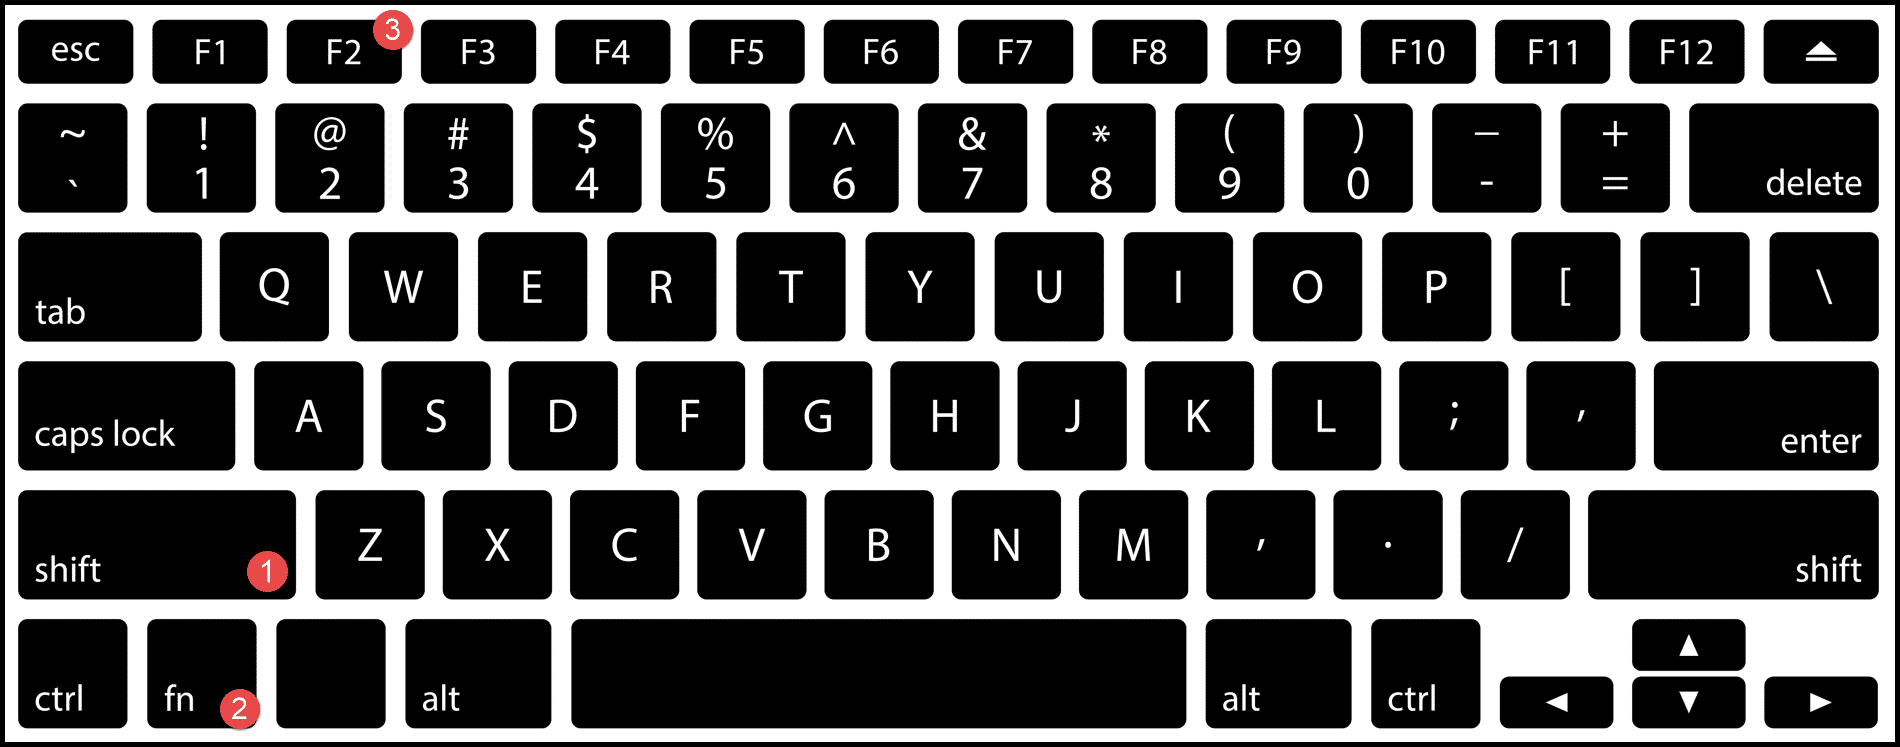 método abreviado de teclado para agregar comentarios